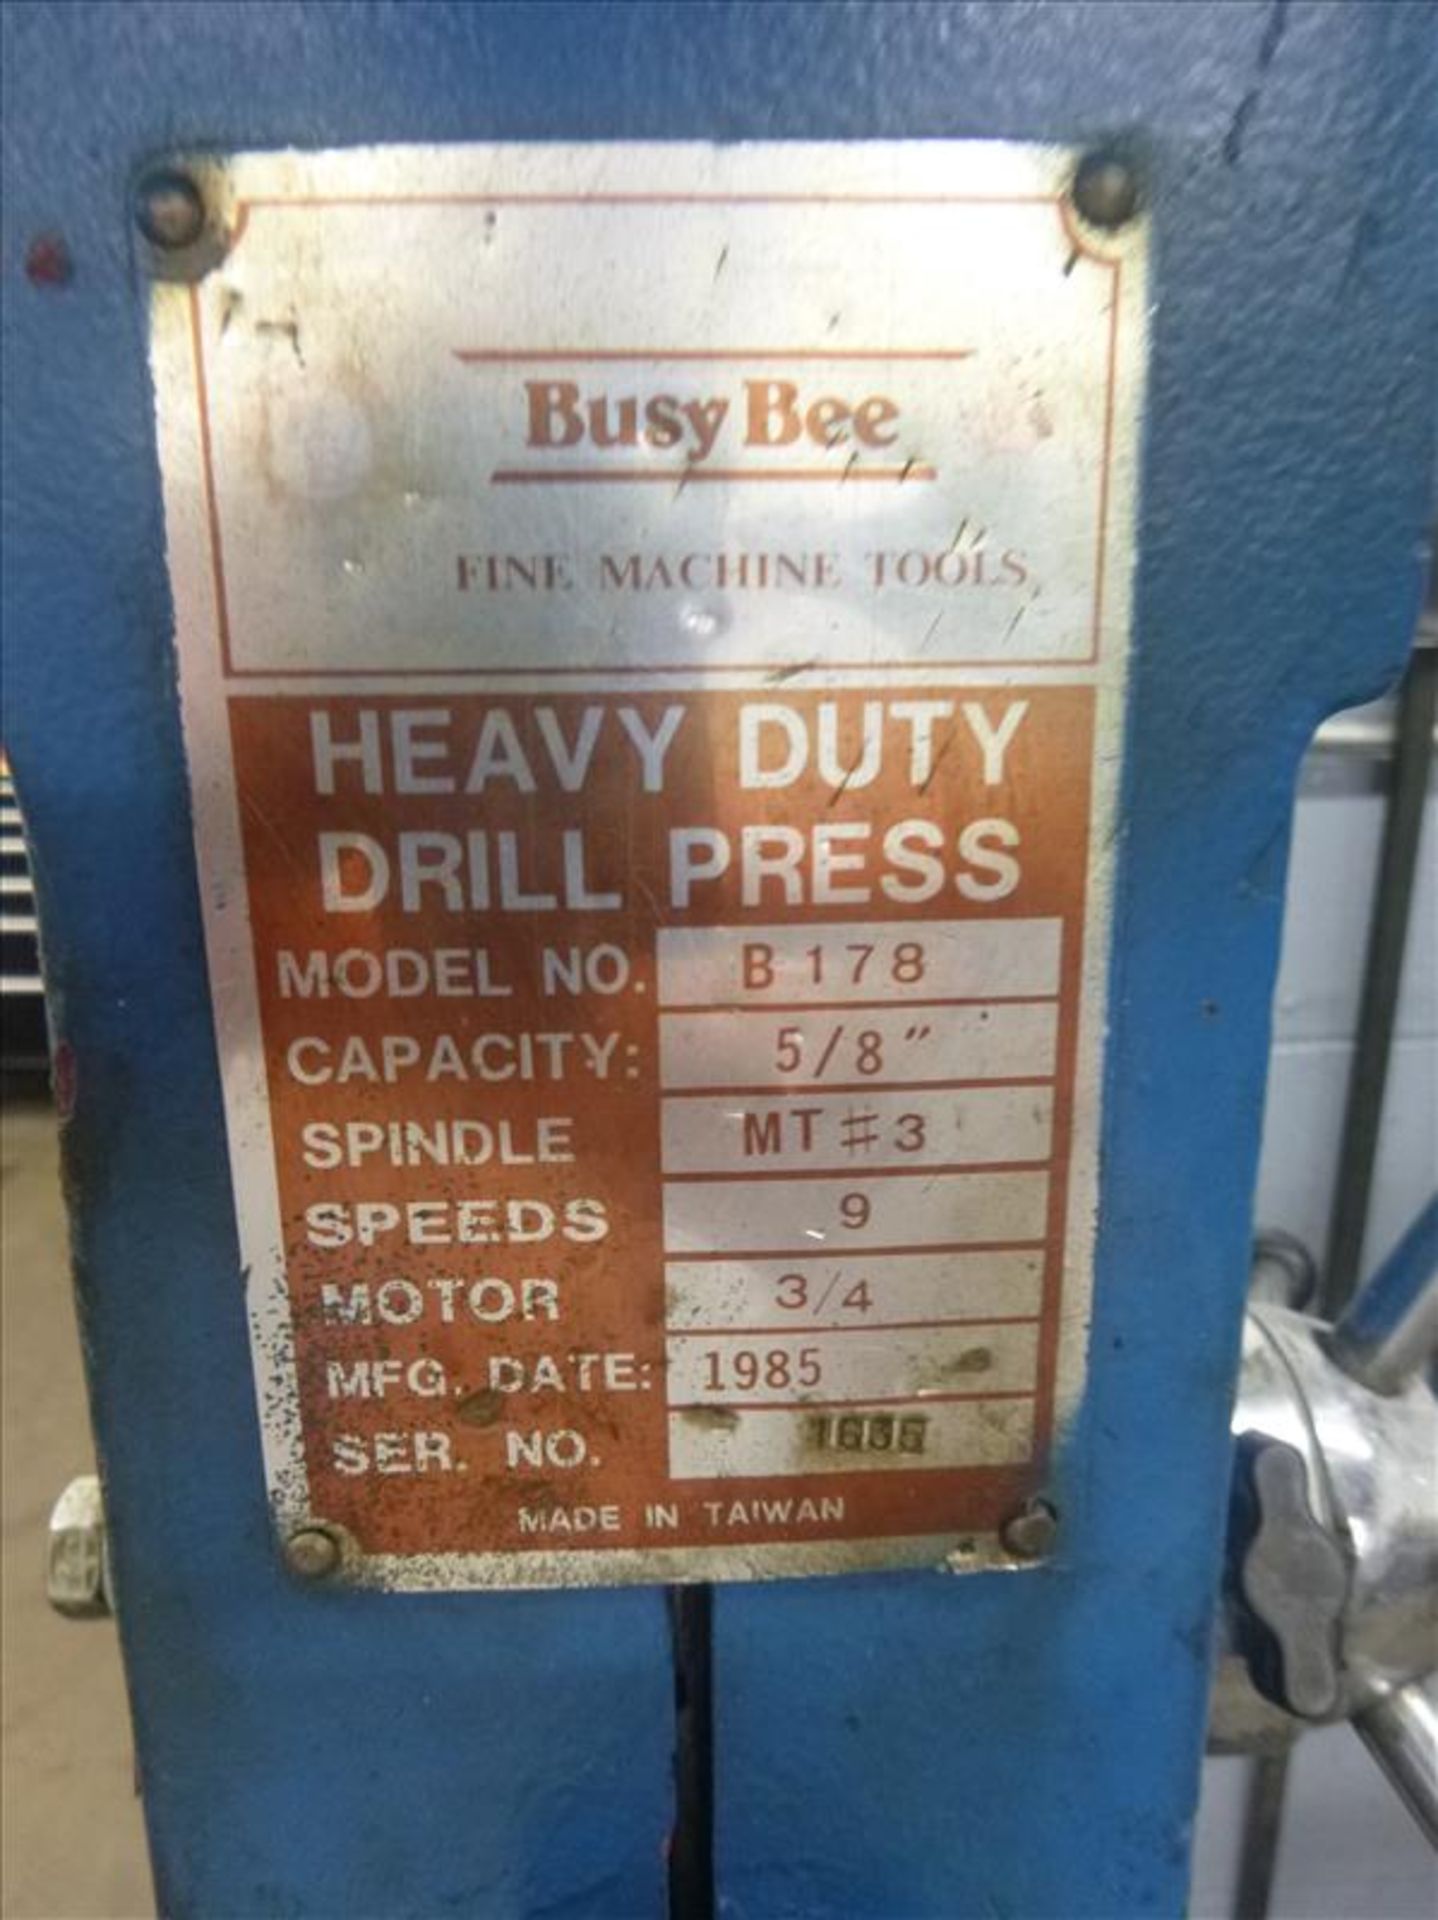 Busy Bee pedestal drill press, model B178, ser. no. 1635, 5/8" cap., c/w drill vise - Image 2 of 2